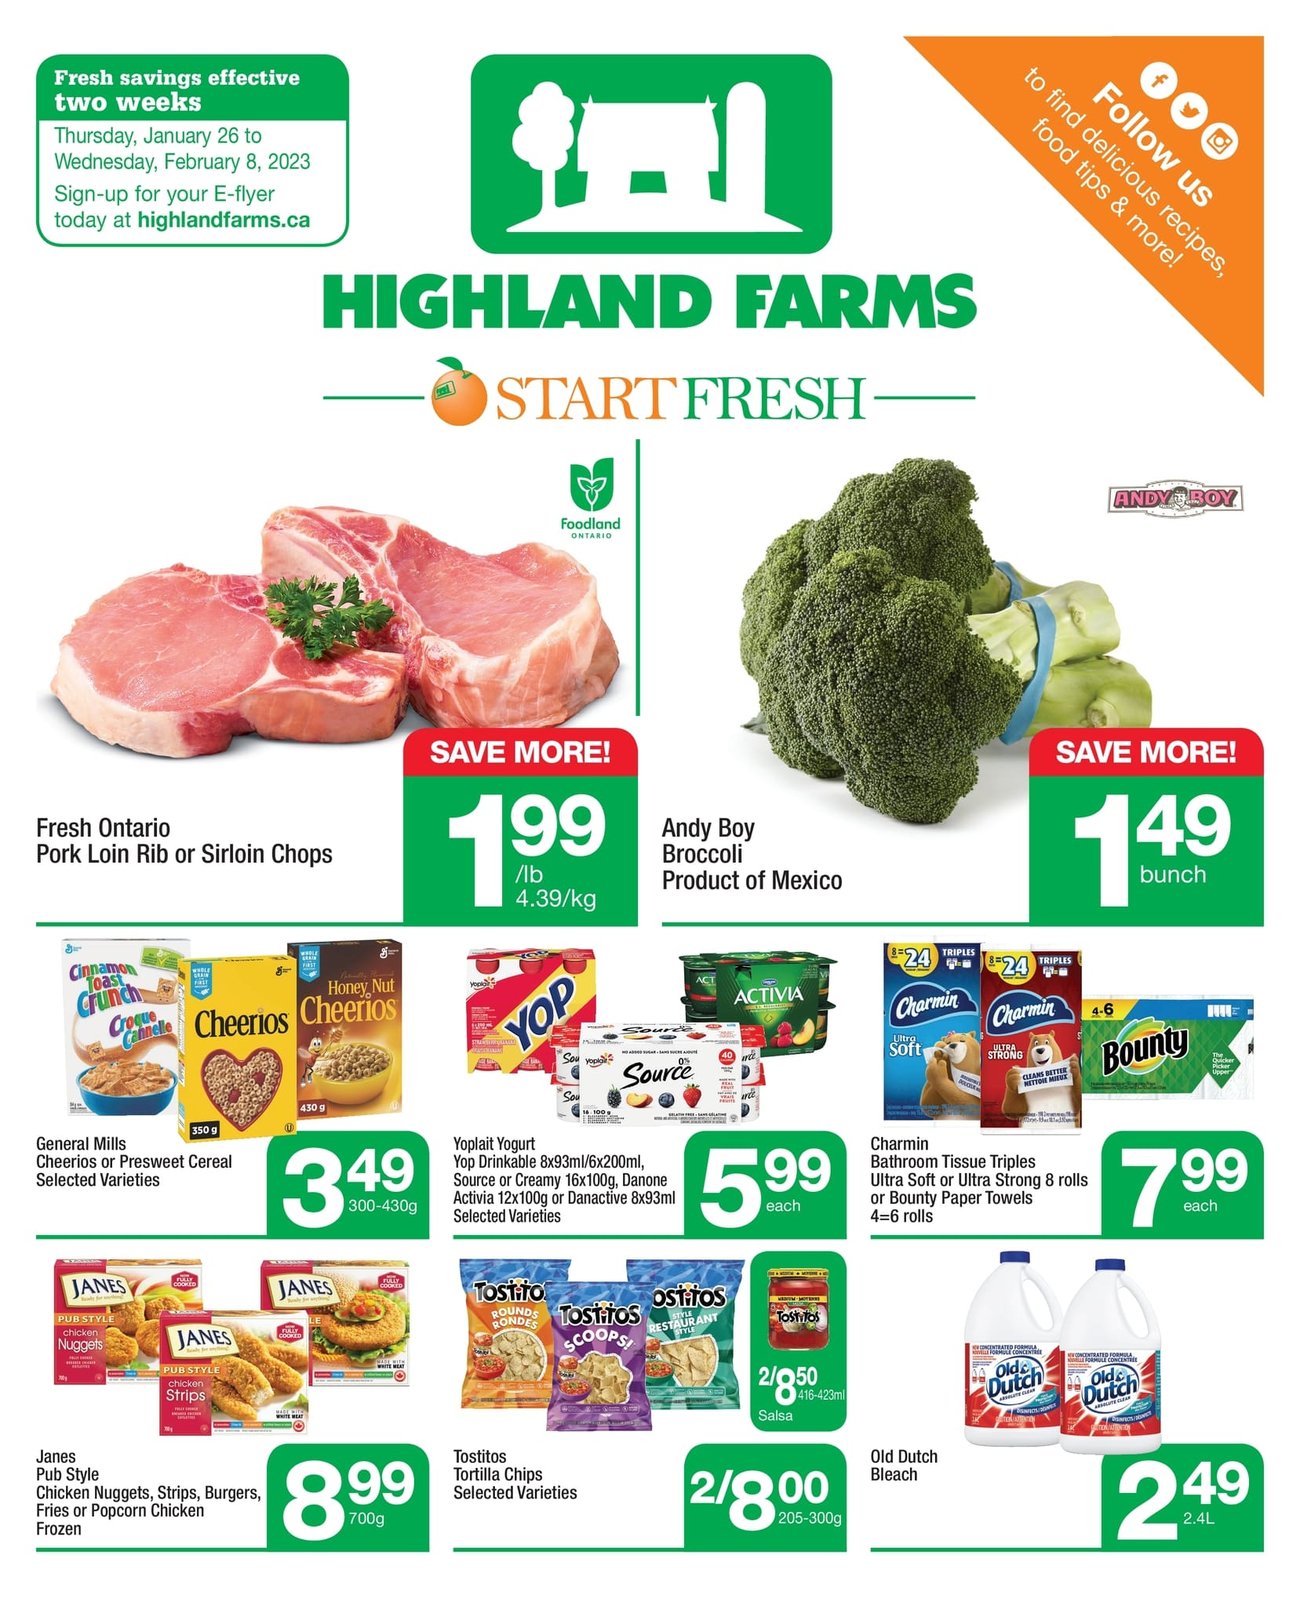 Highland Farms - 2 Weeks of Savings - Page 1